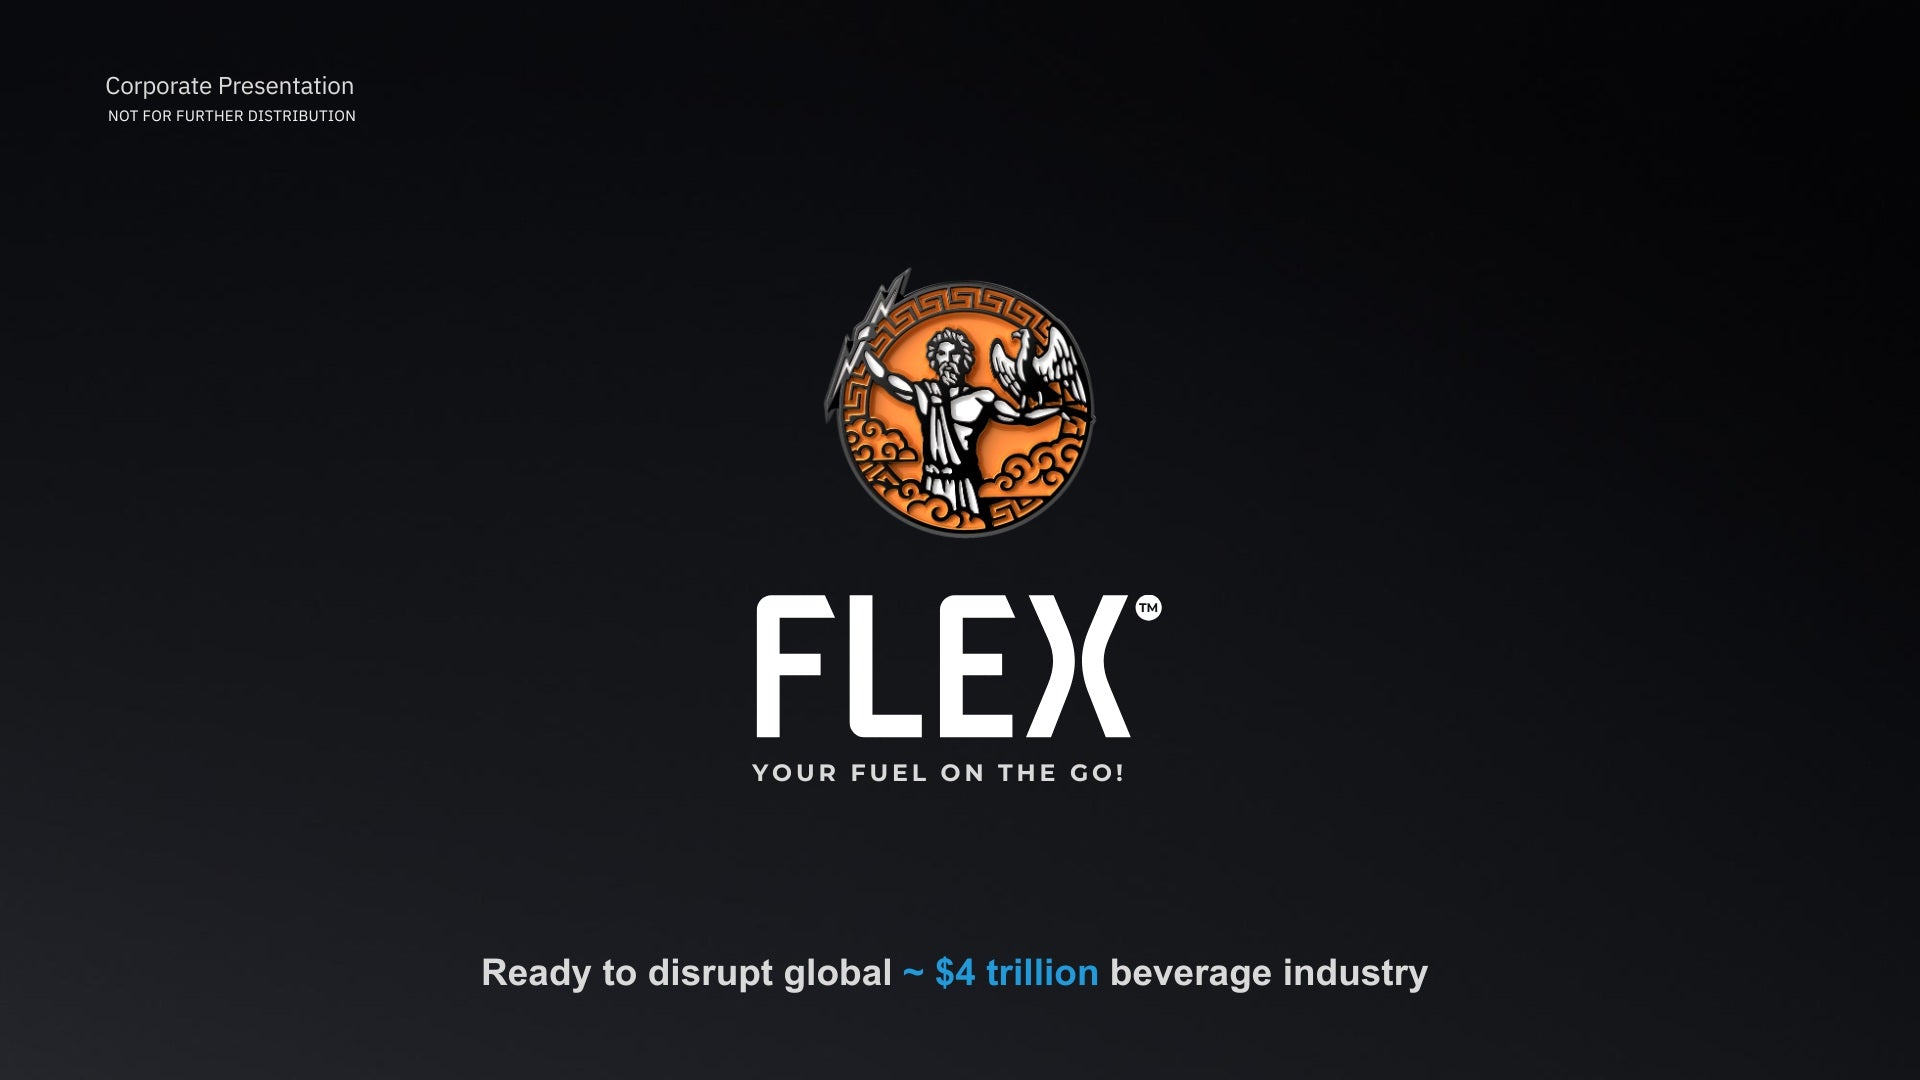 FLEX INVESTOR RELATIONS DECK. Ready to disrupt global 4 trillion dollar beverage industry.